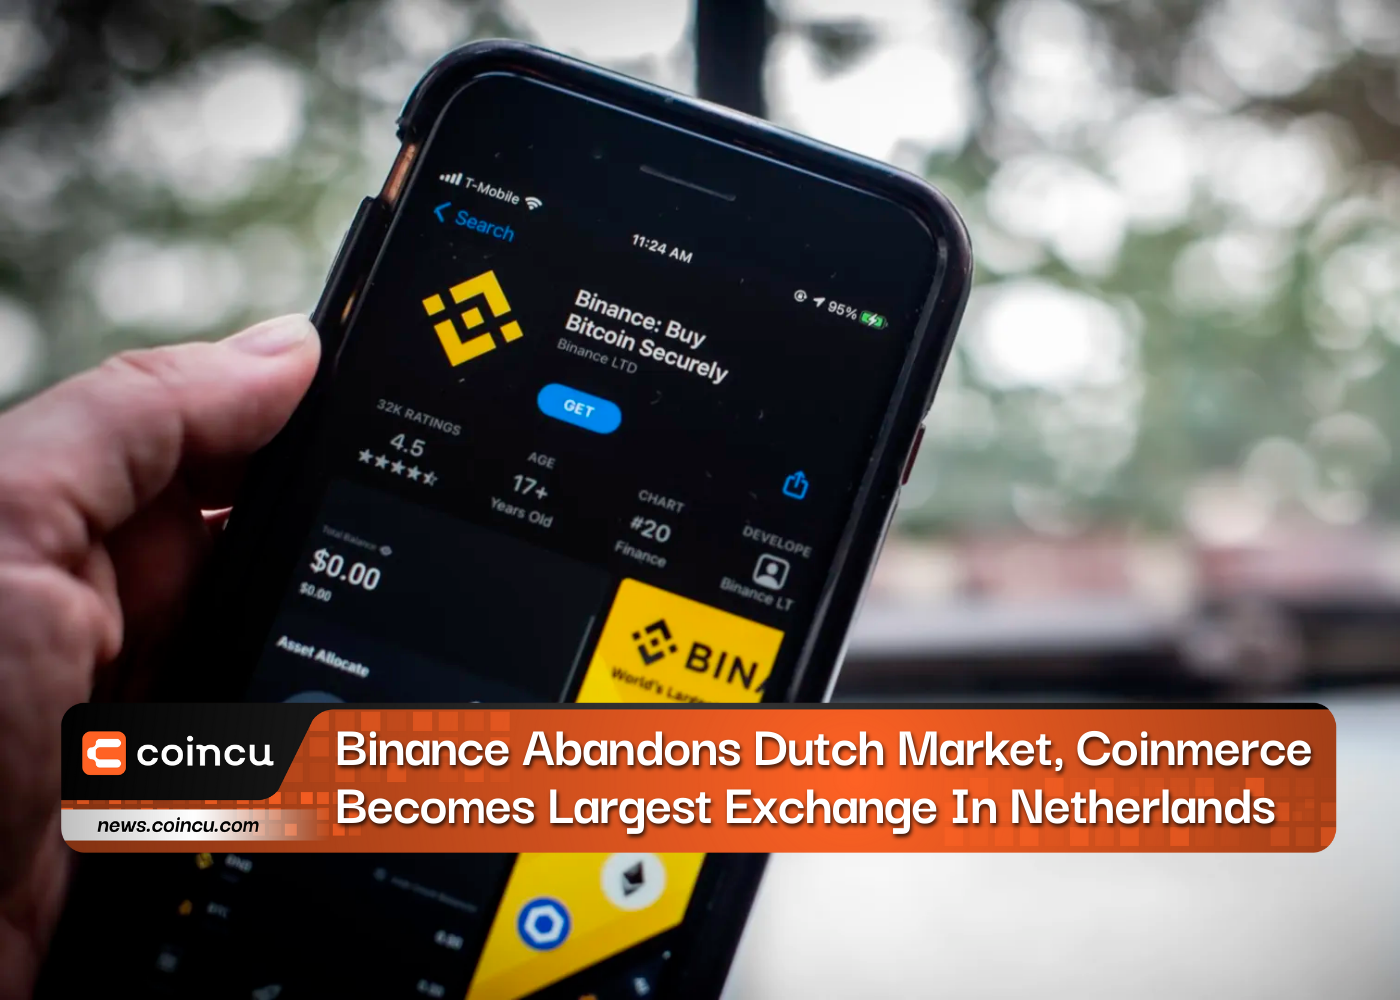 Binance Abandons Dutch Market, Coinmerce Becomes Largest Exchange In Netherlands